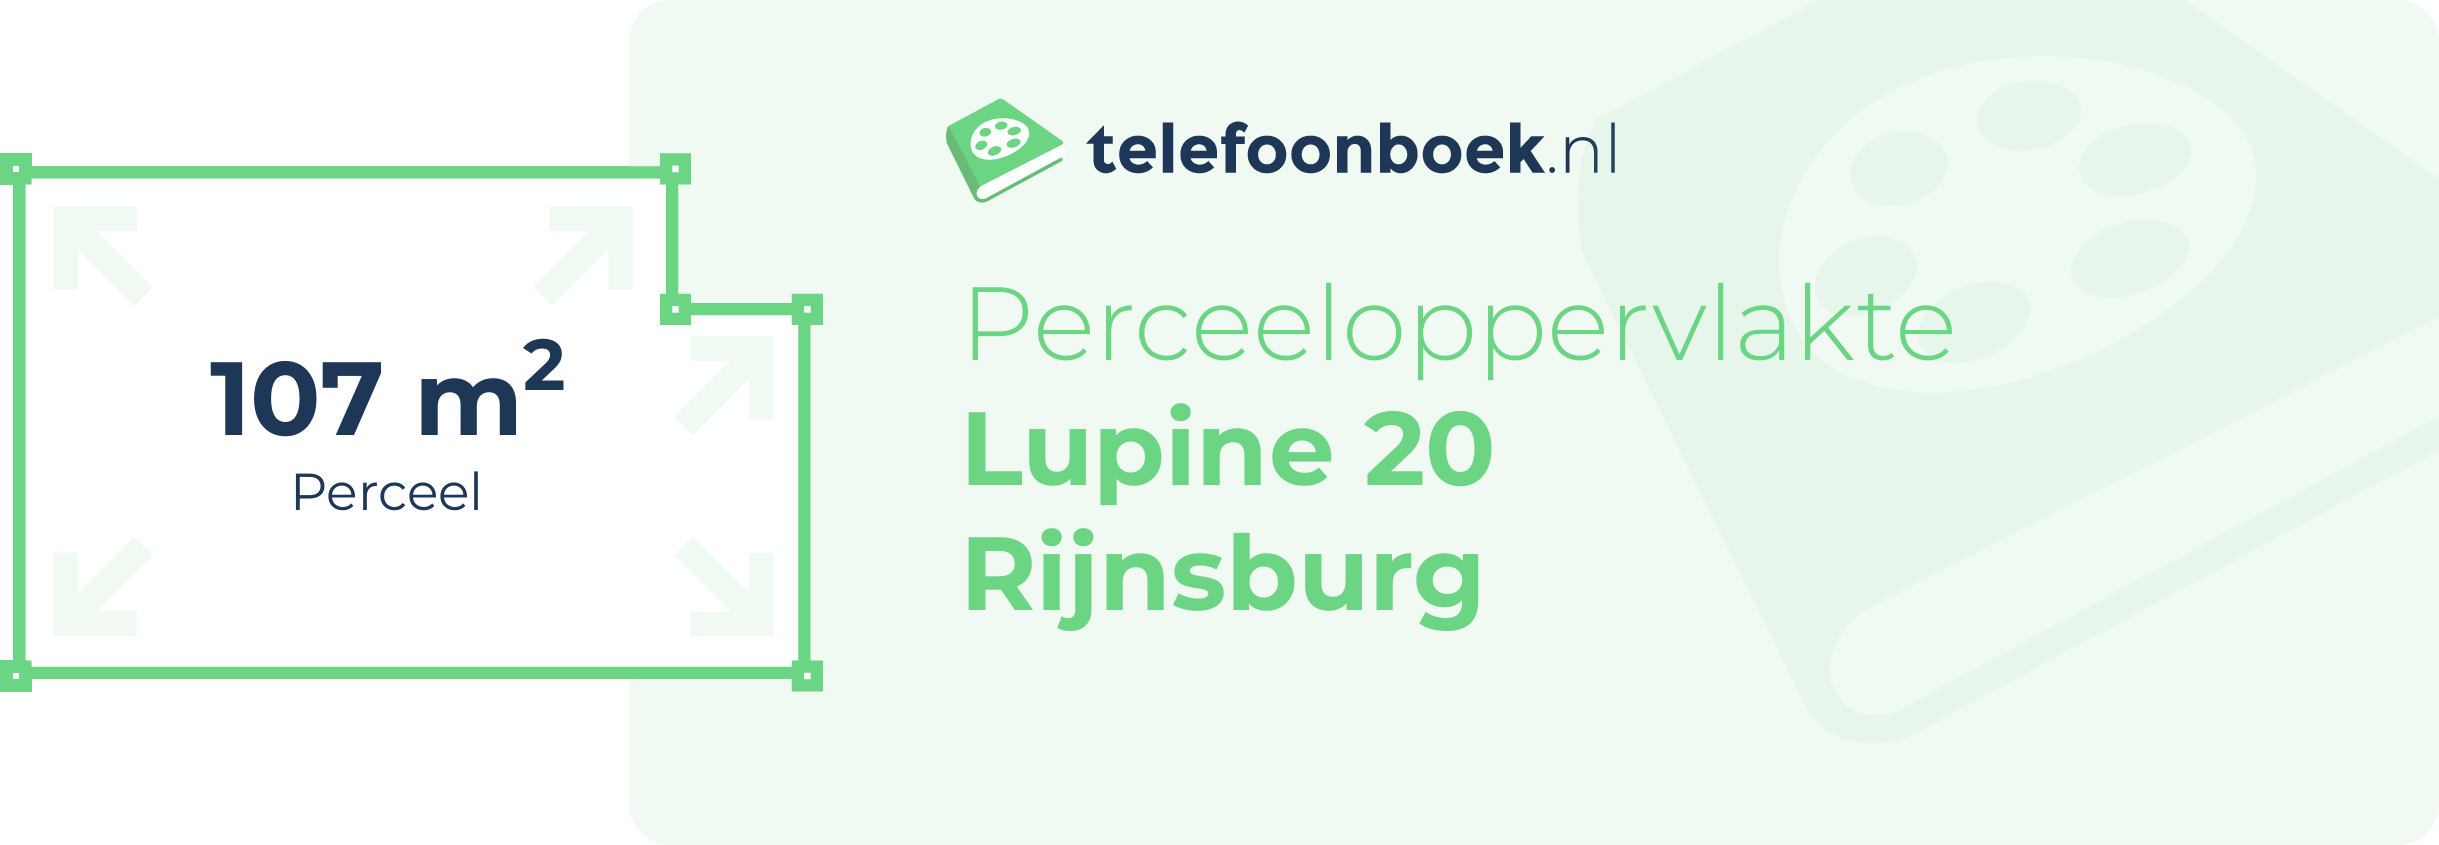 Perceeloppervlakte Lupine 20 Rijnsburg